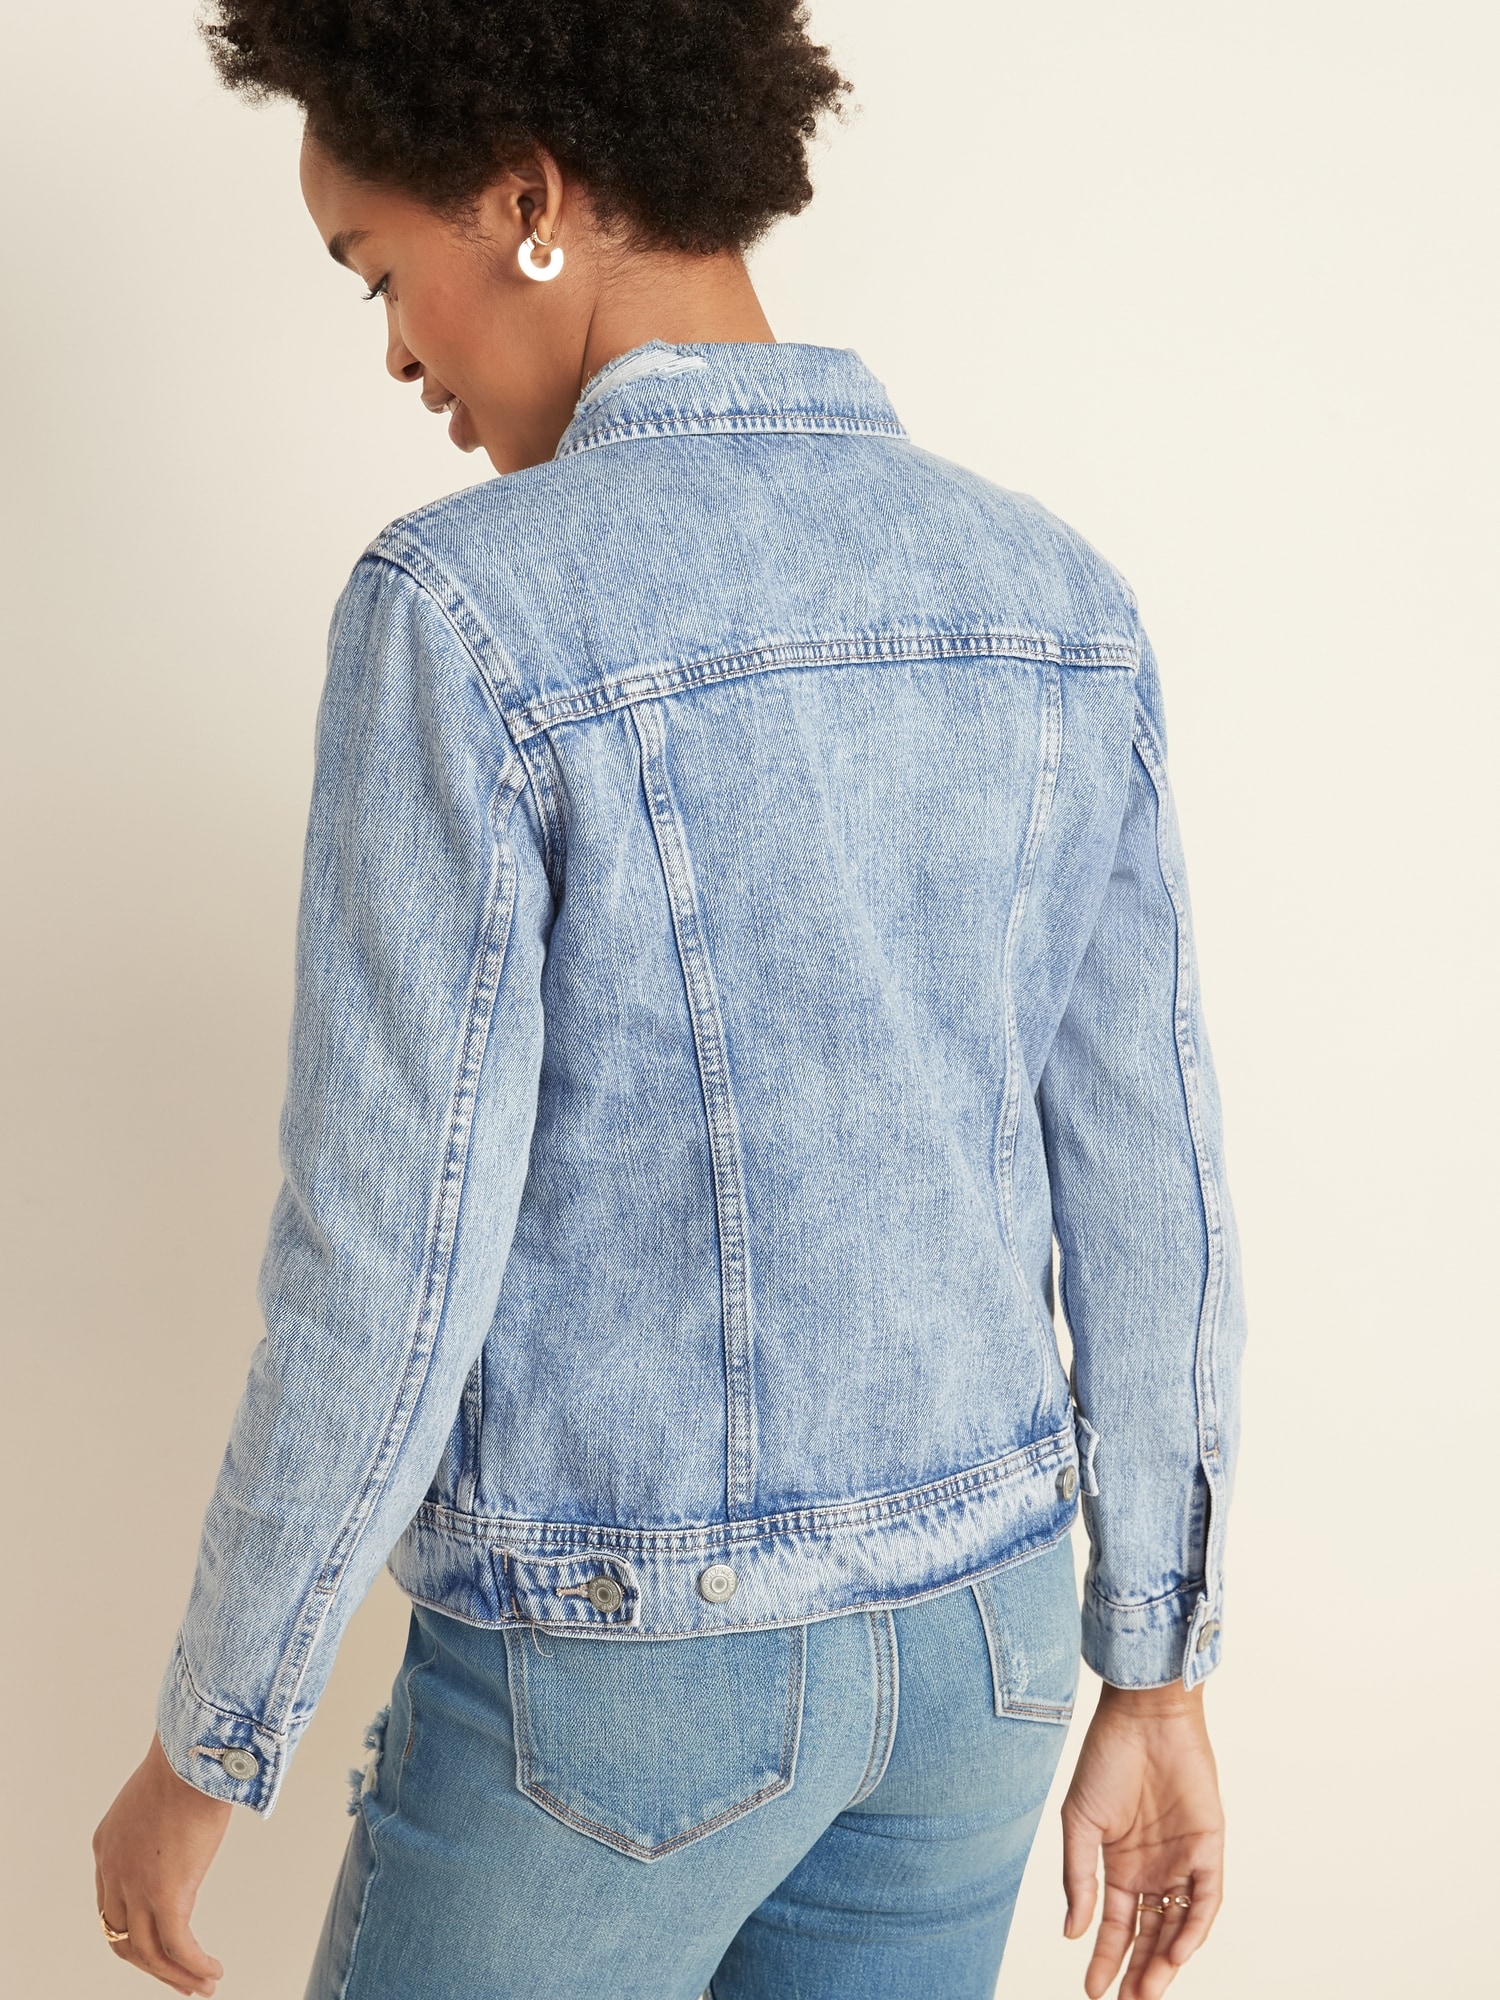 light wash distressed jean jacket